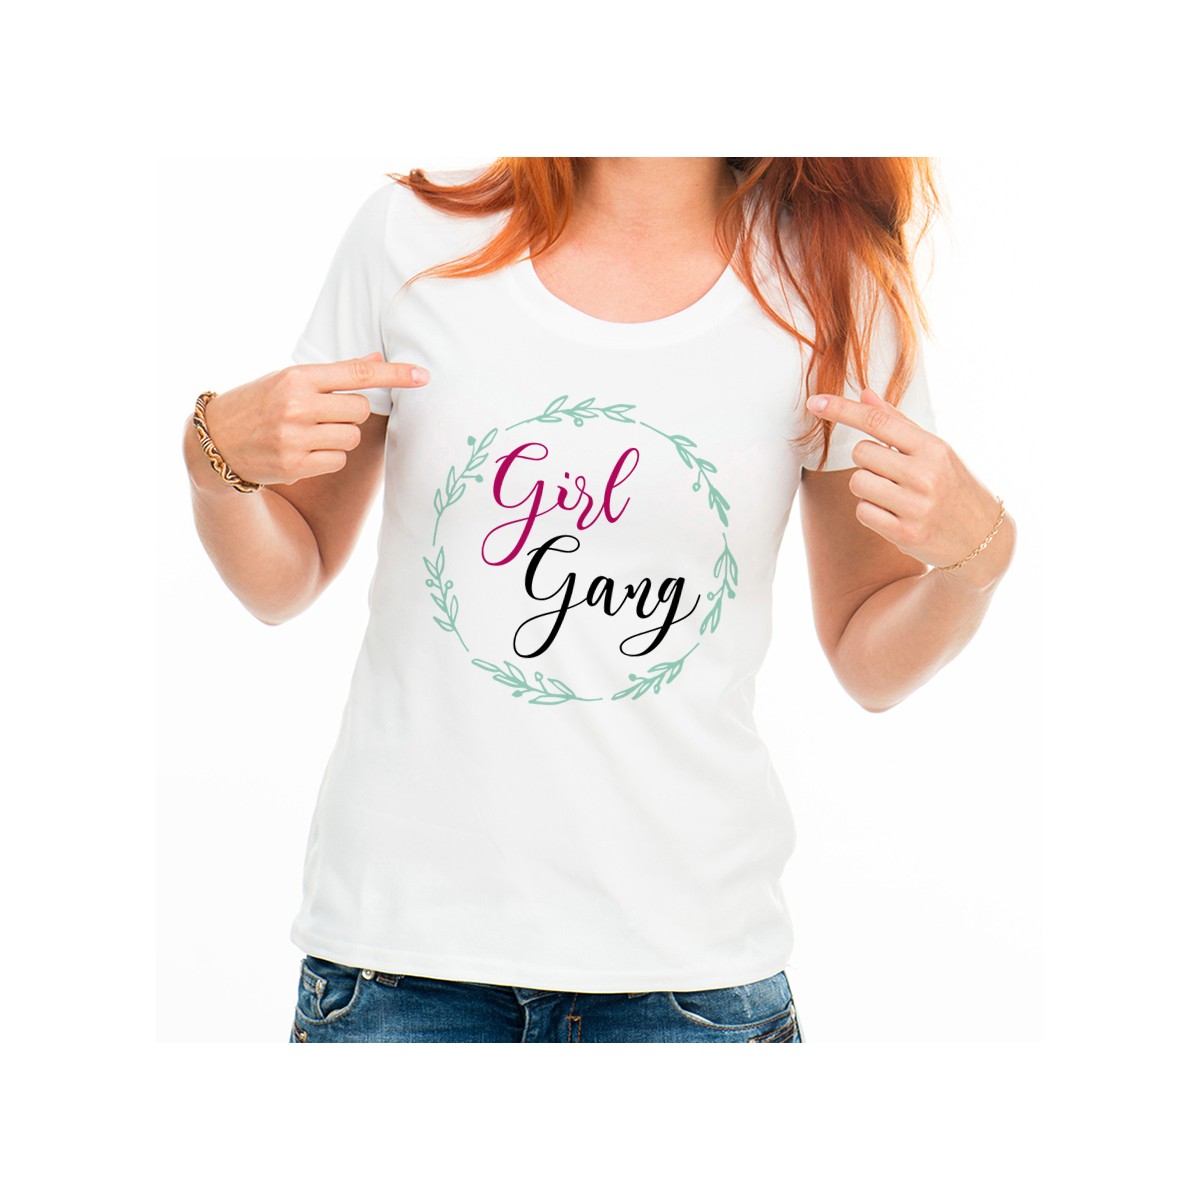 T-shirt Girl Gang